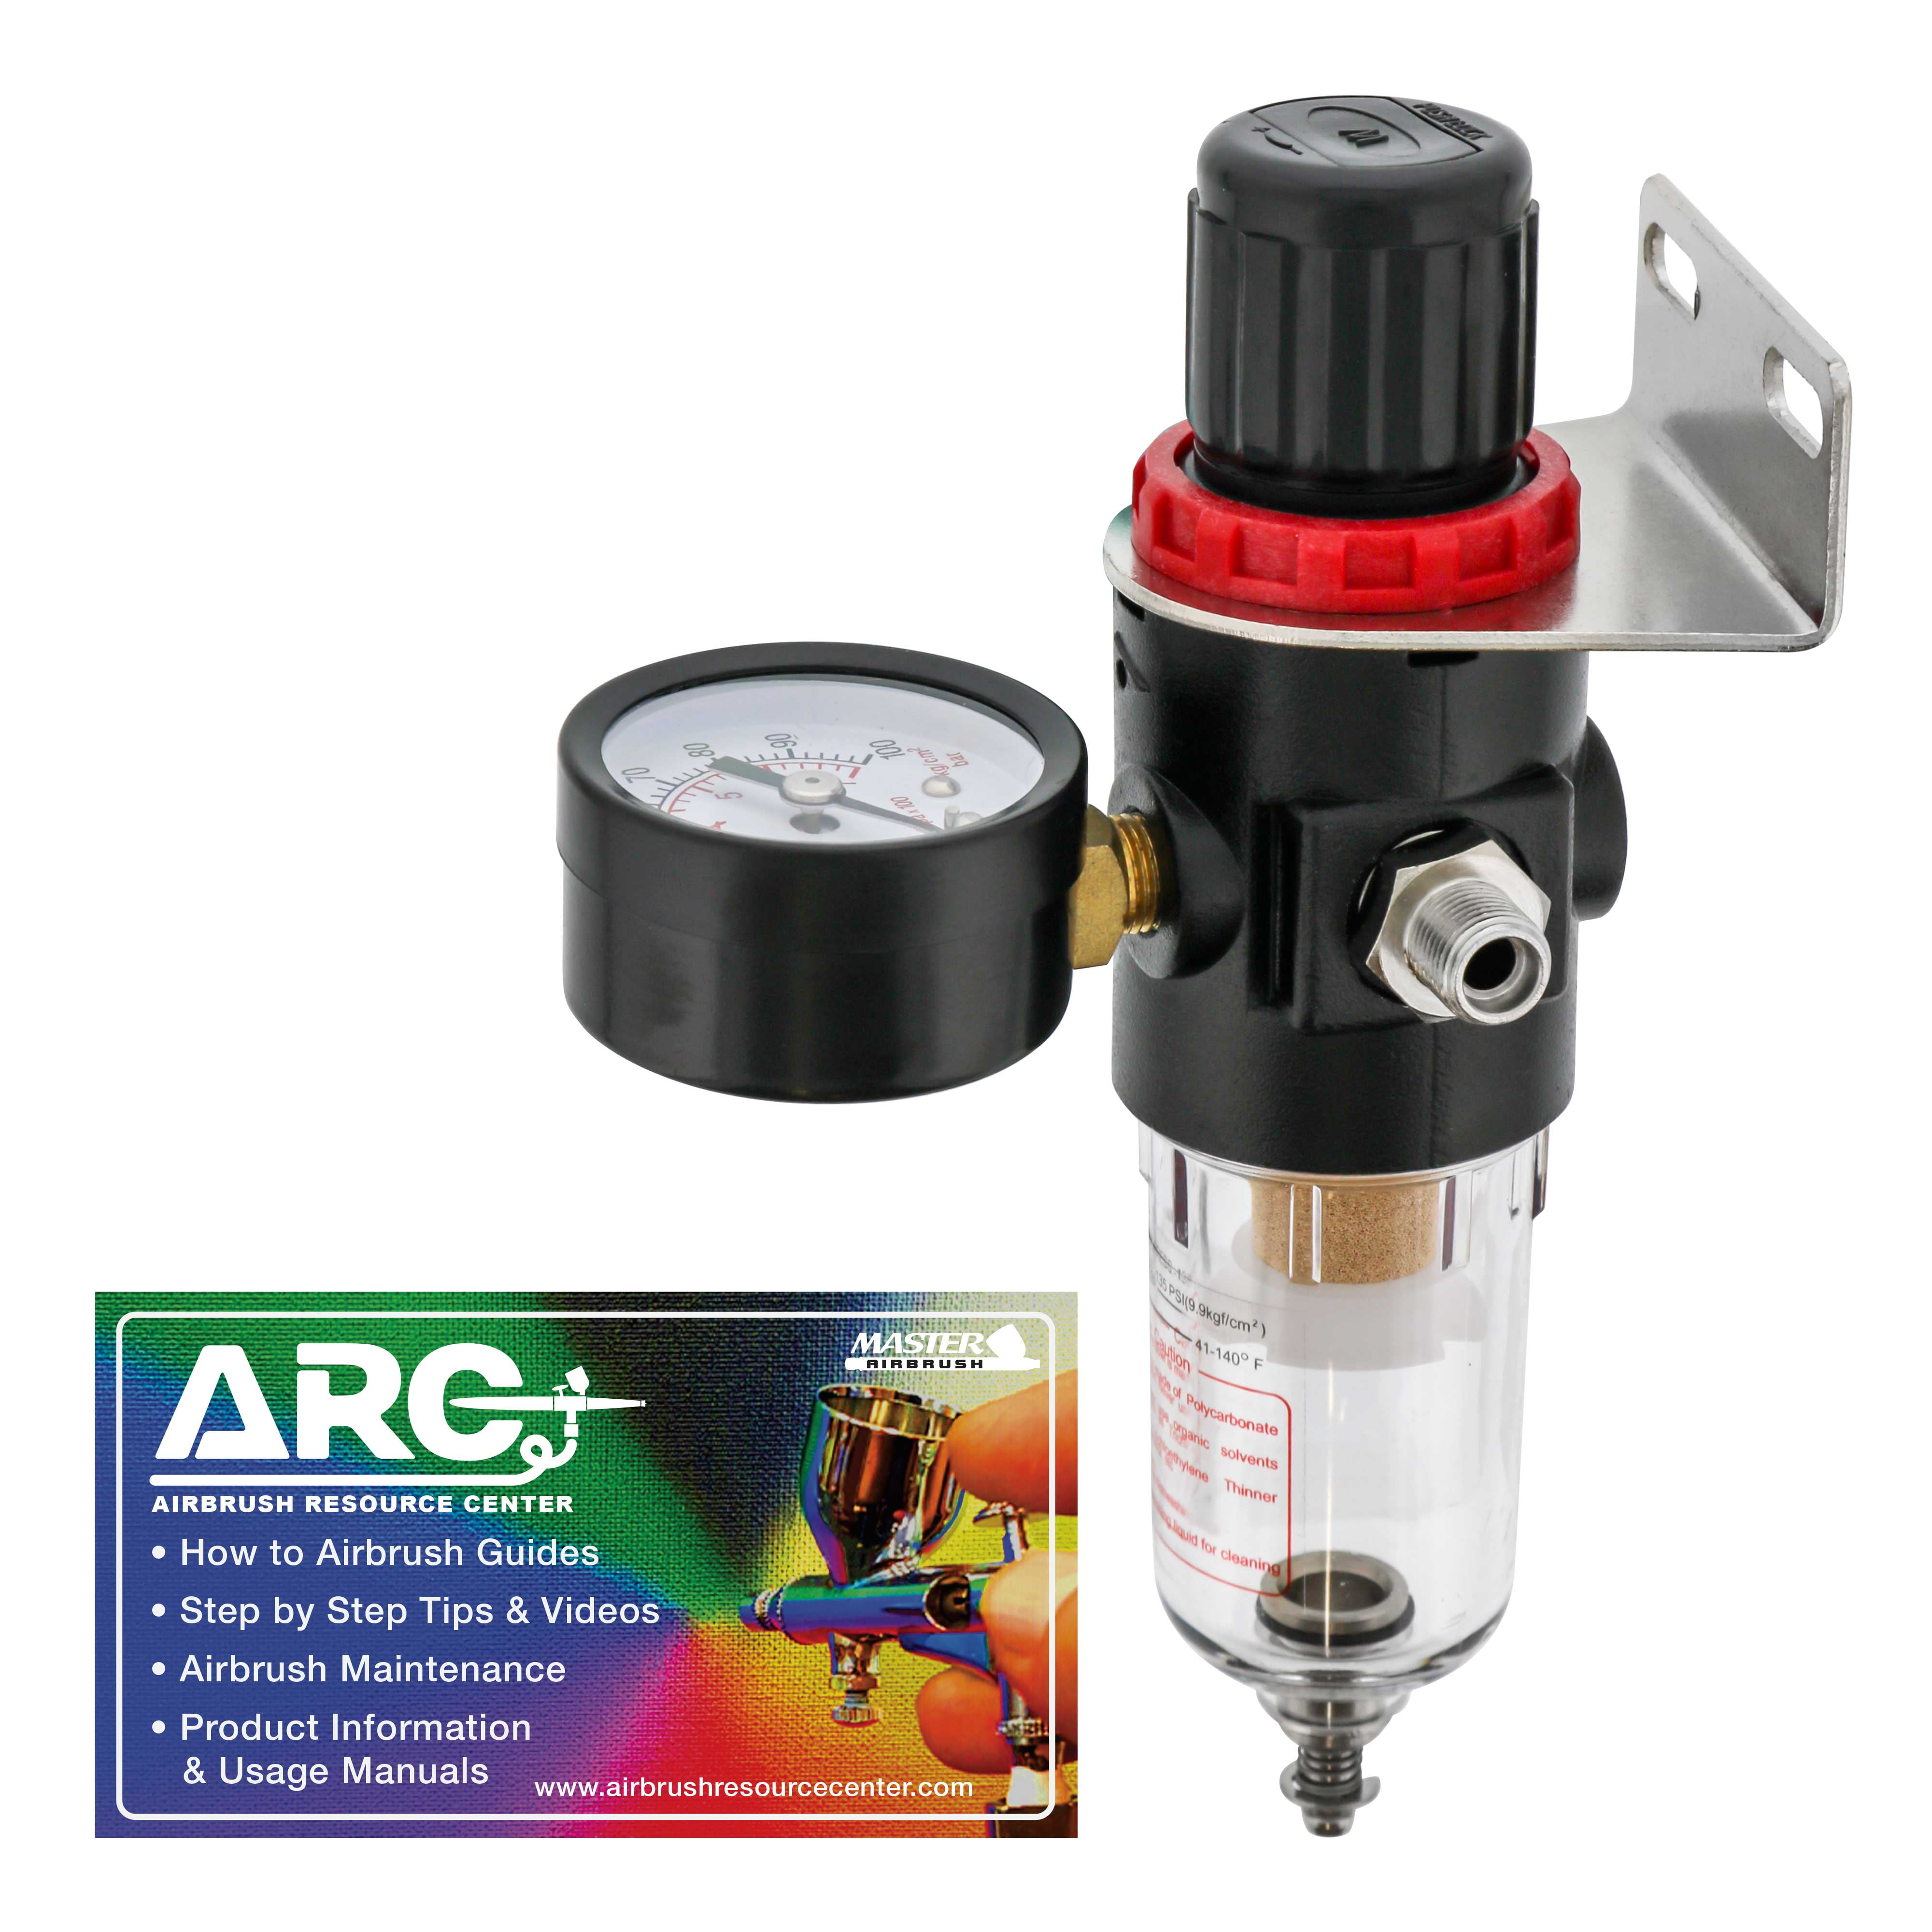 Valve Gaugex1 REGULATOR HEAVY DUTY Air Compressor Pump Pressure Control Switch 